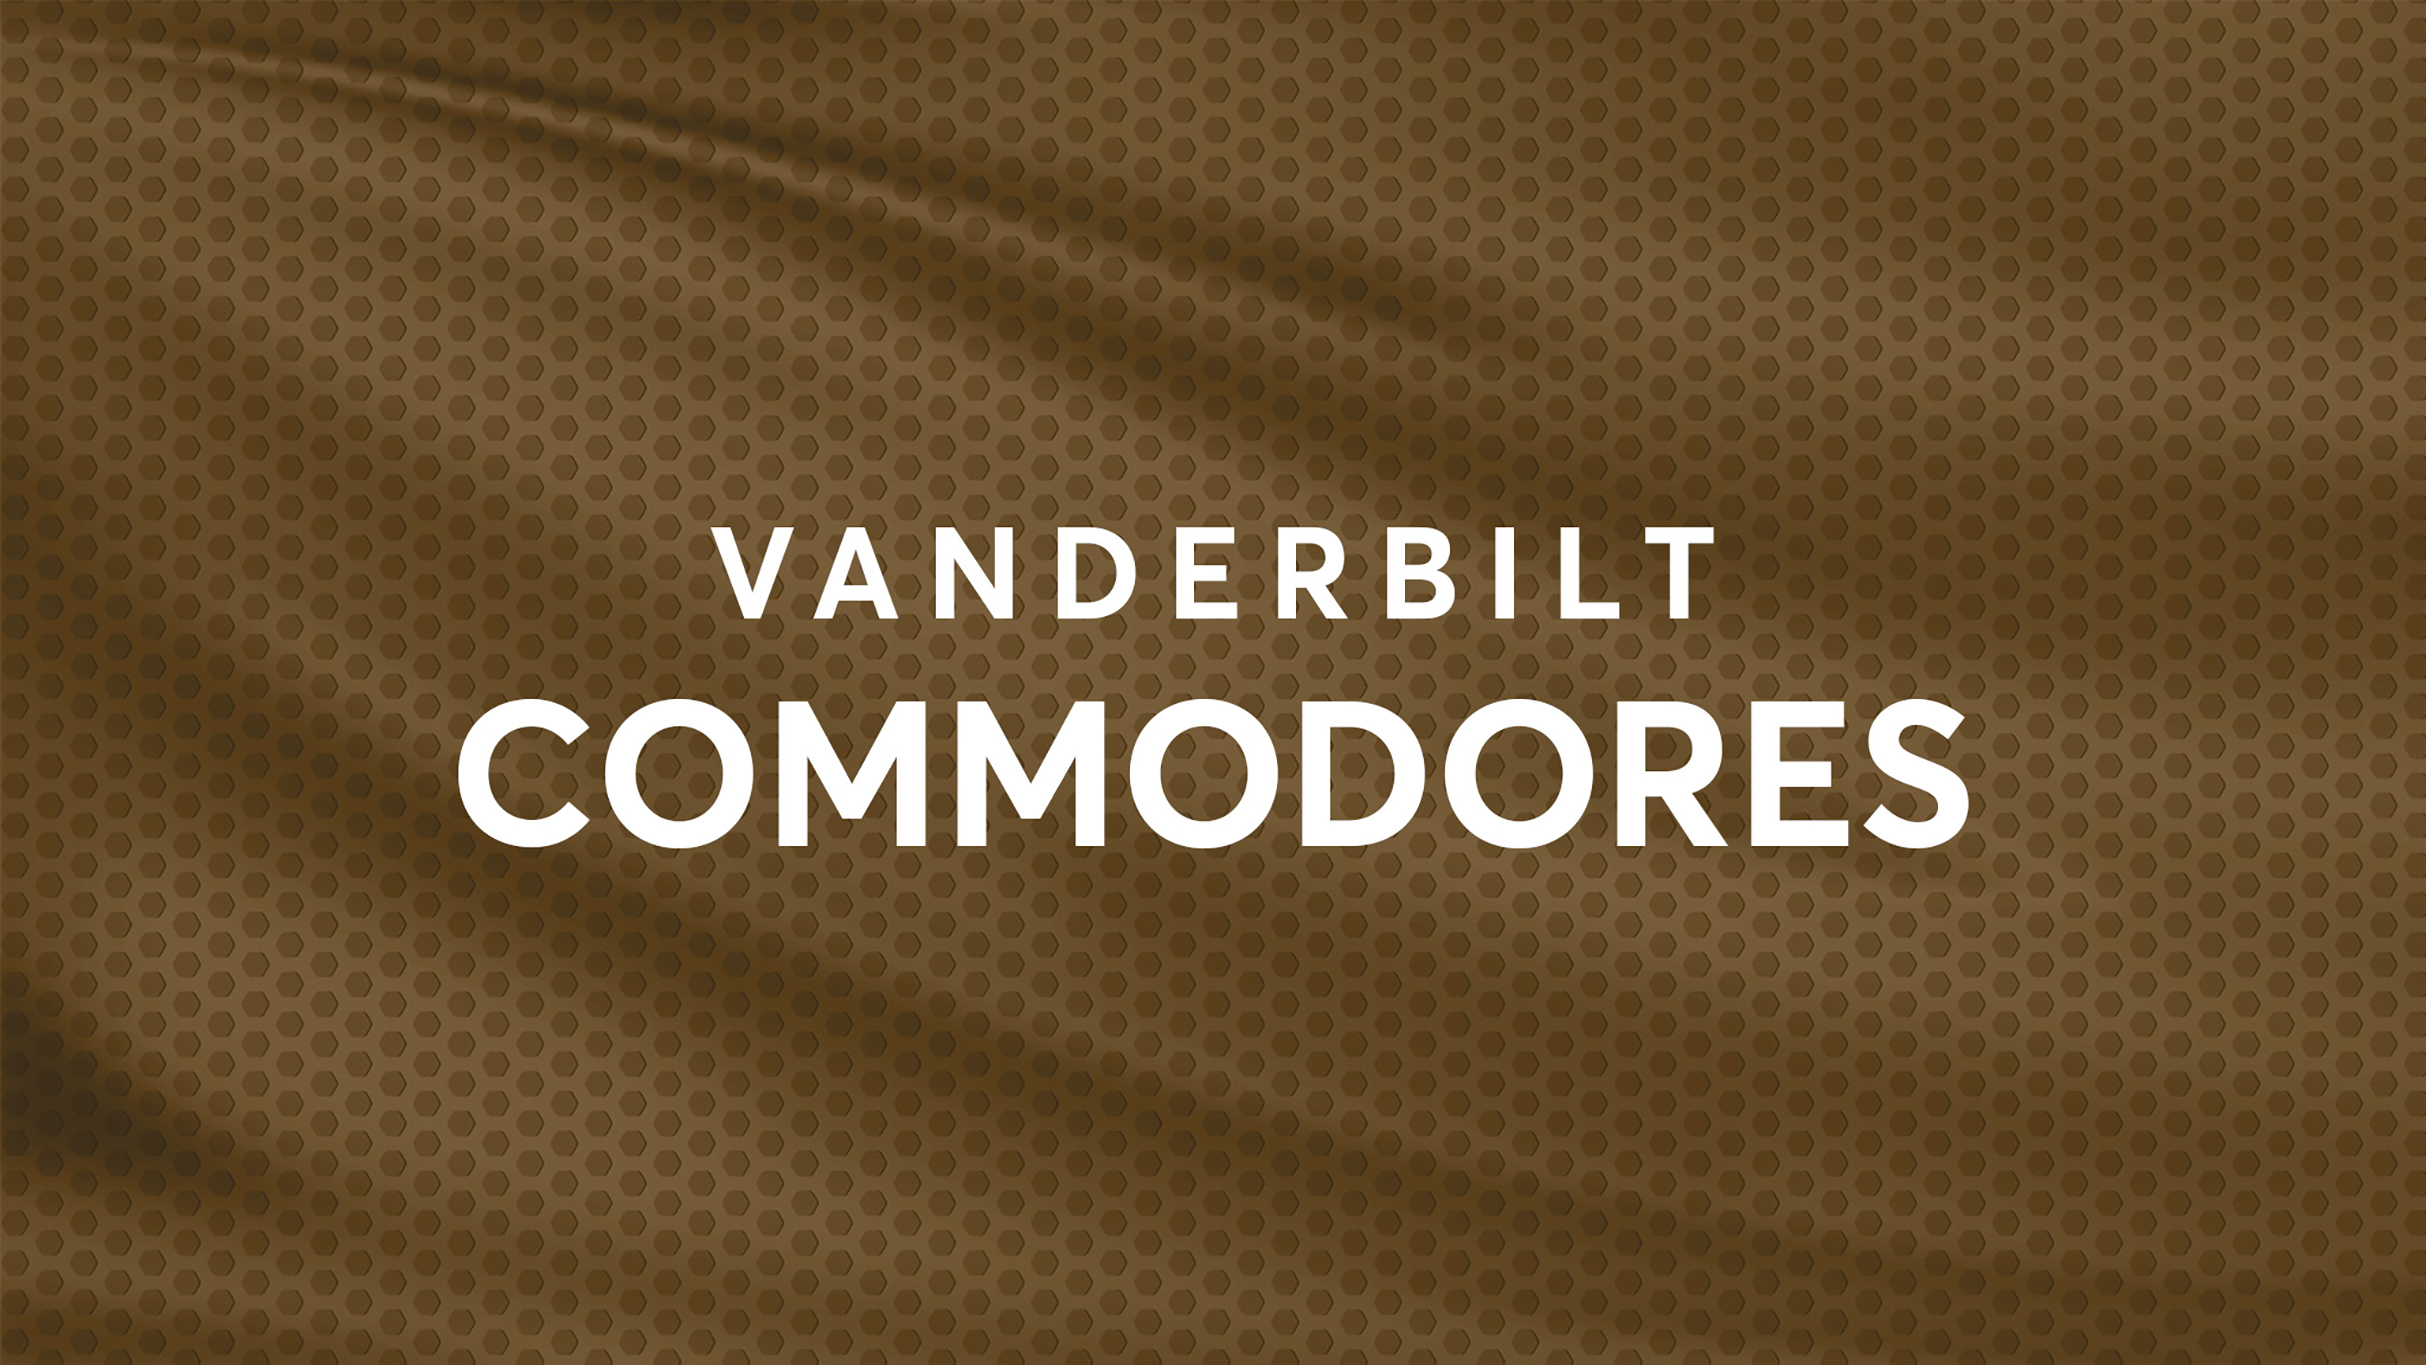 Vanderbilt Commodores Football vs. Virginia Tech Hokies Football